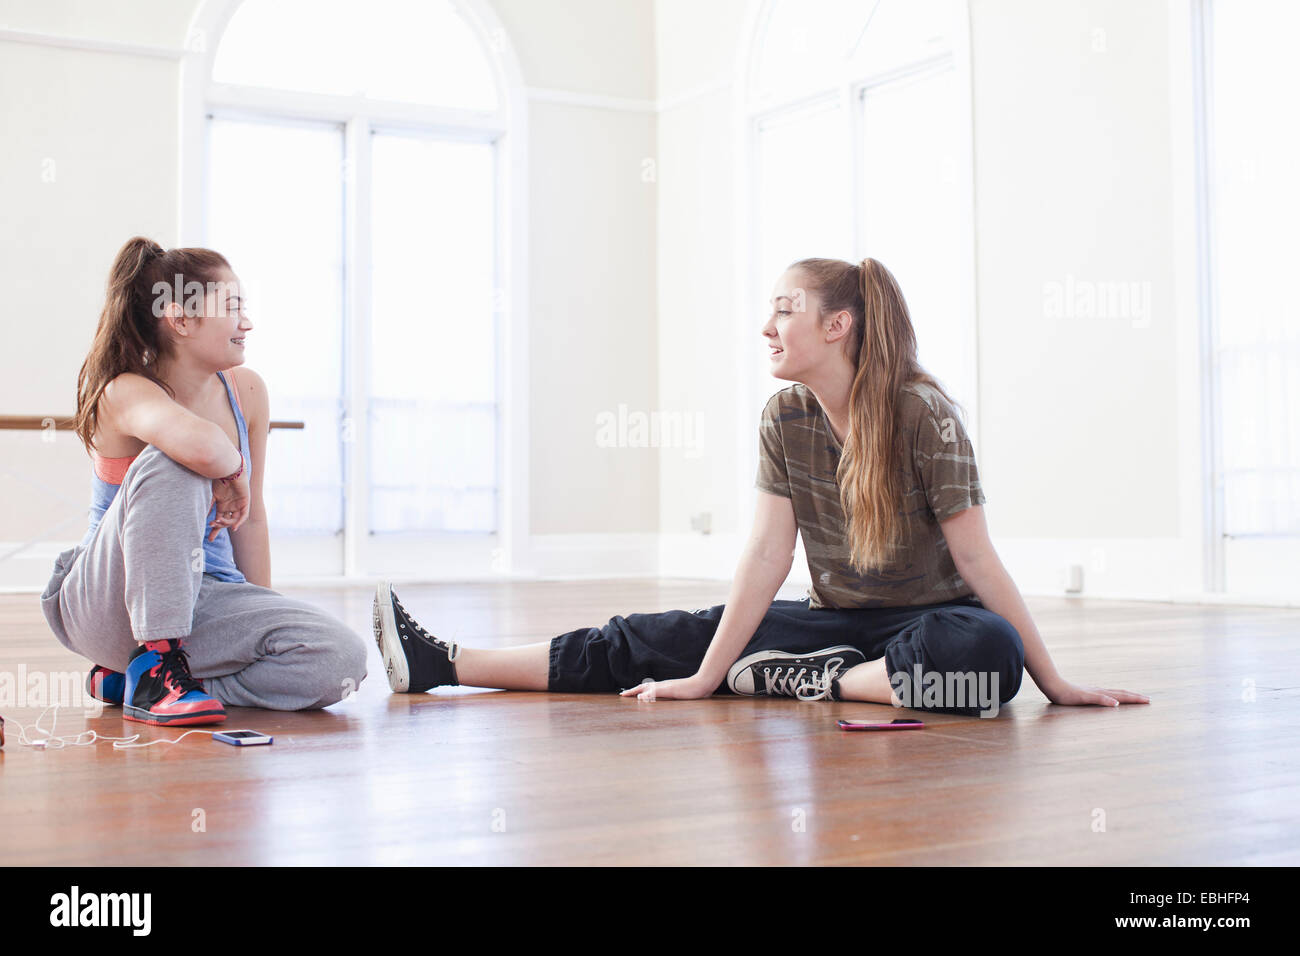 Deux adolescentes sitting on floor chatting in ballet school Banque D'Images